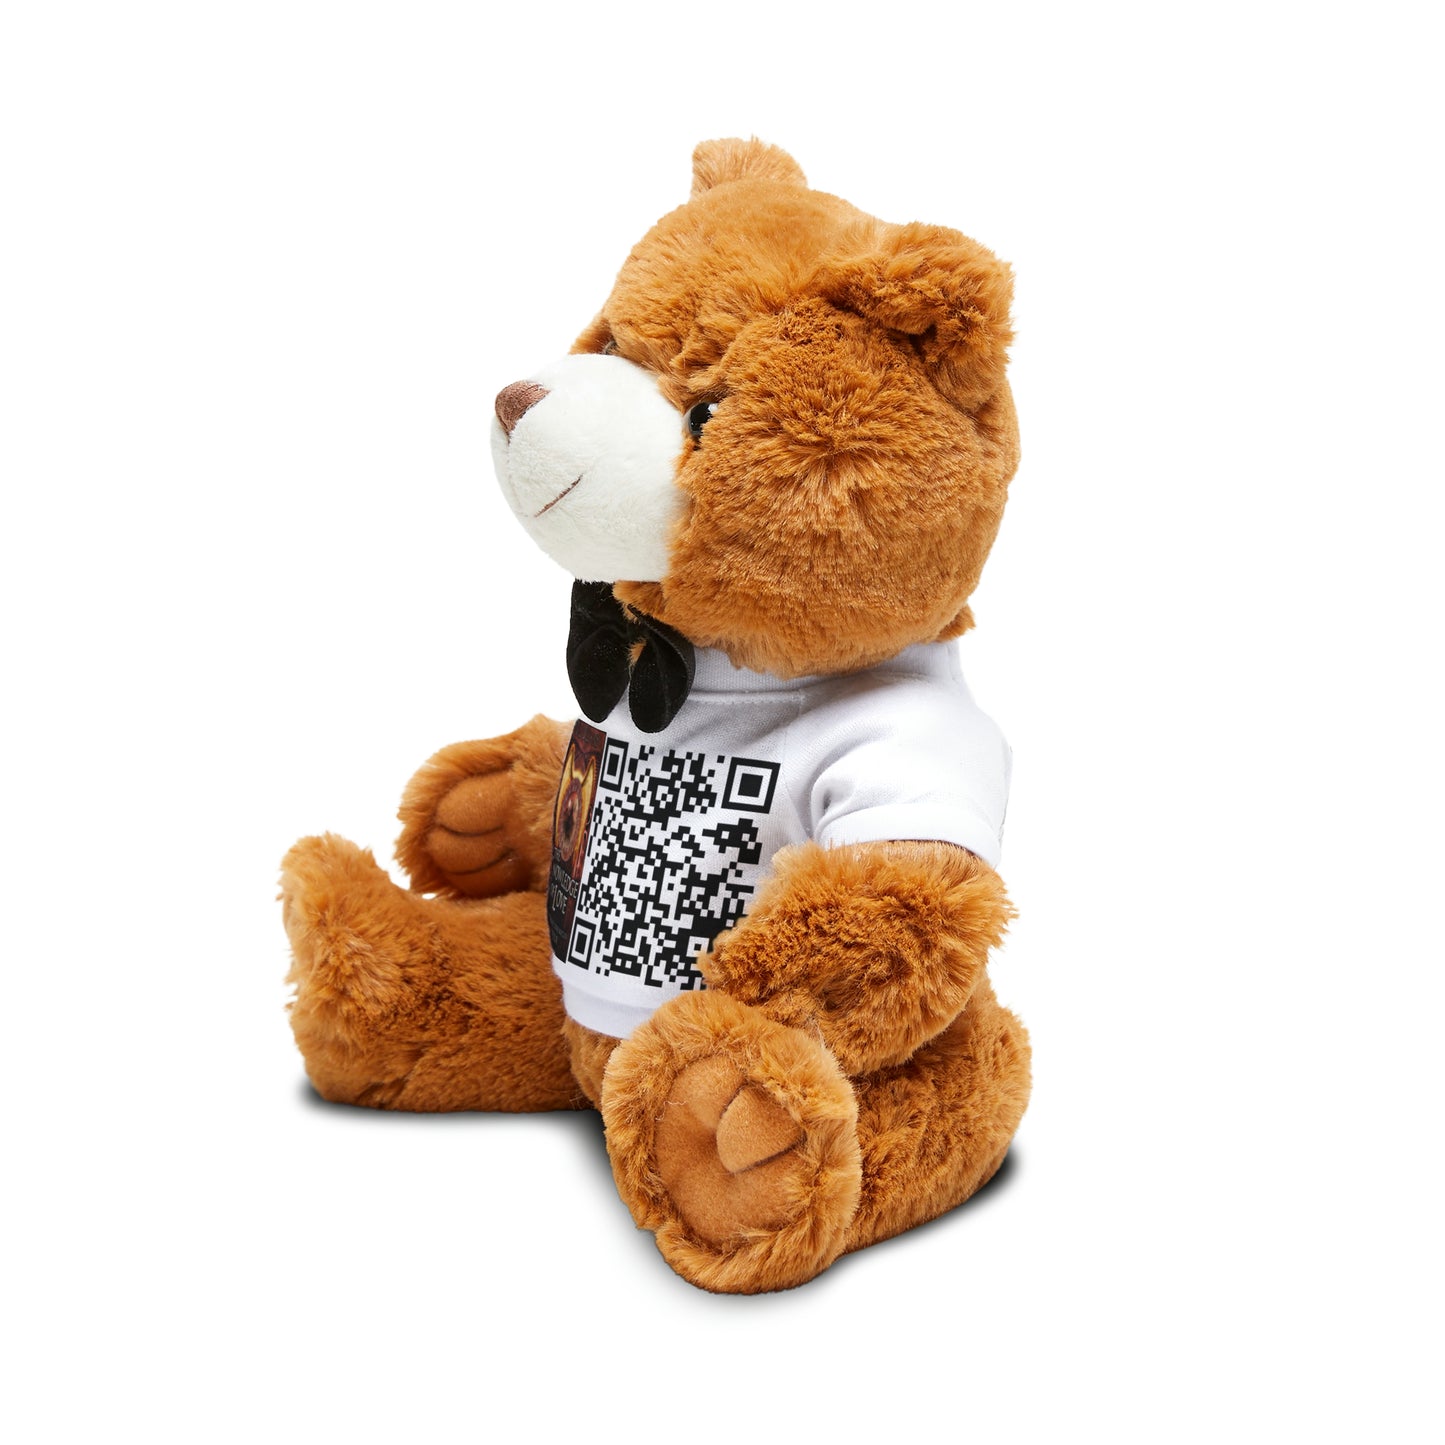 The Knowledge of Love - Teddy Bear